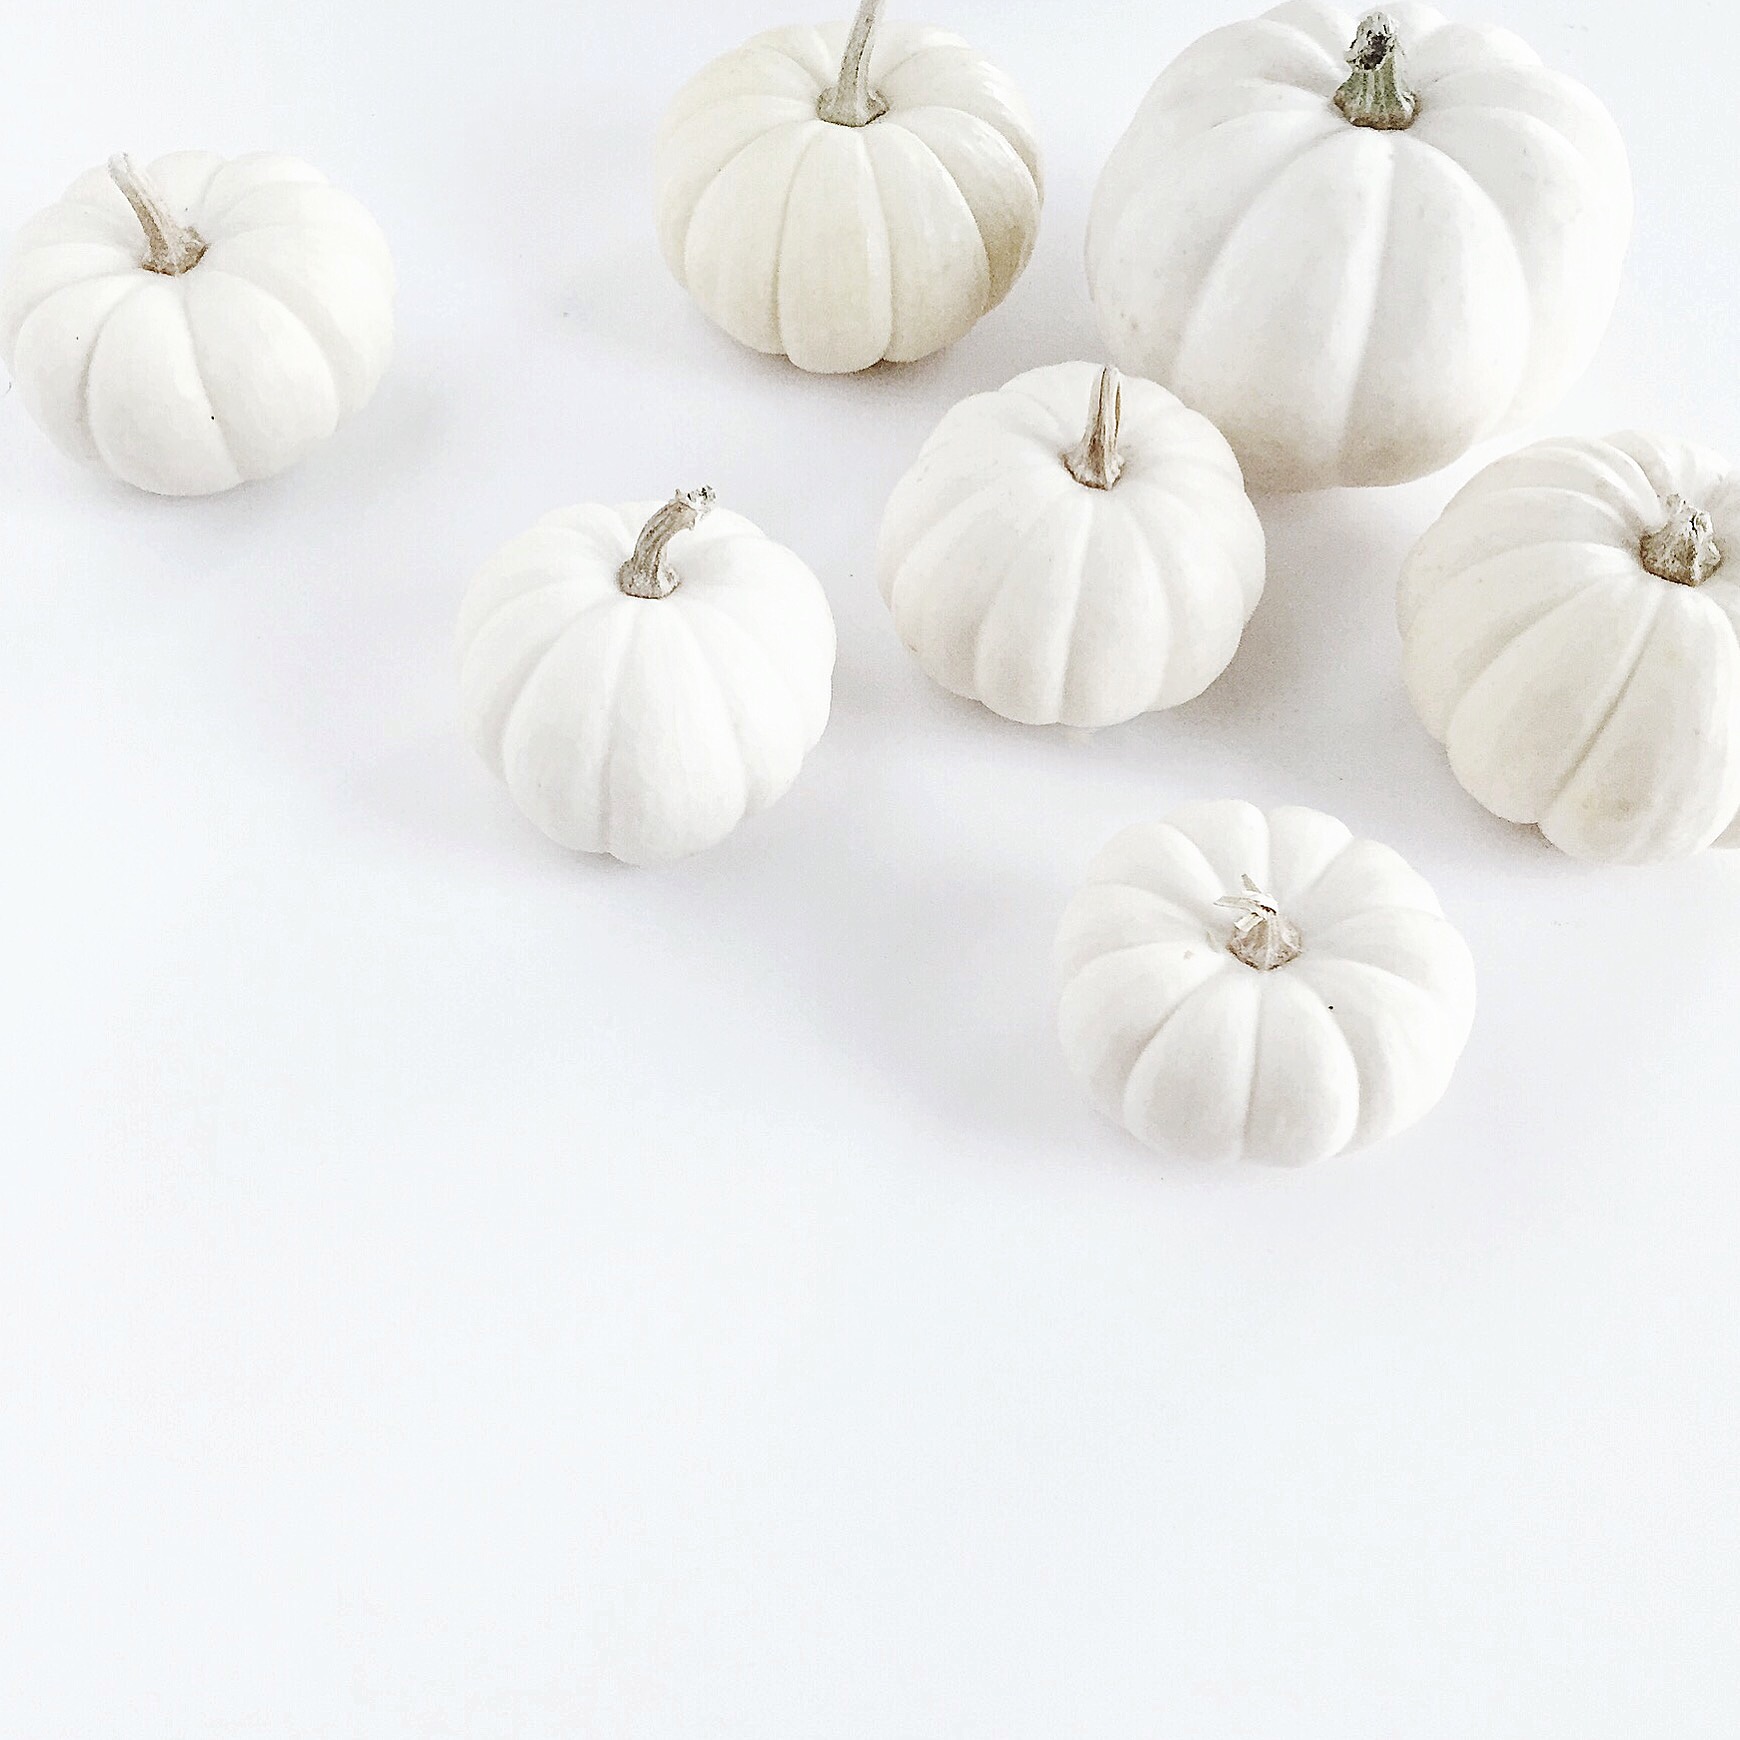 white pumpkins